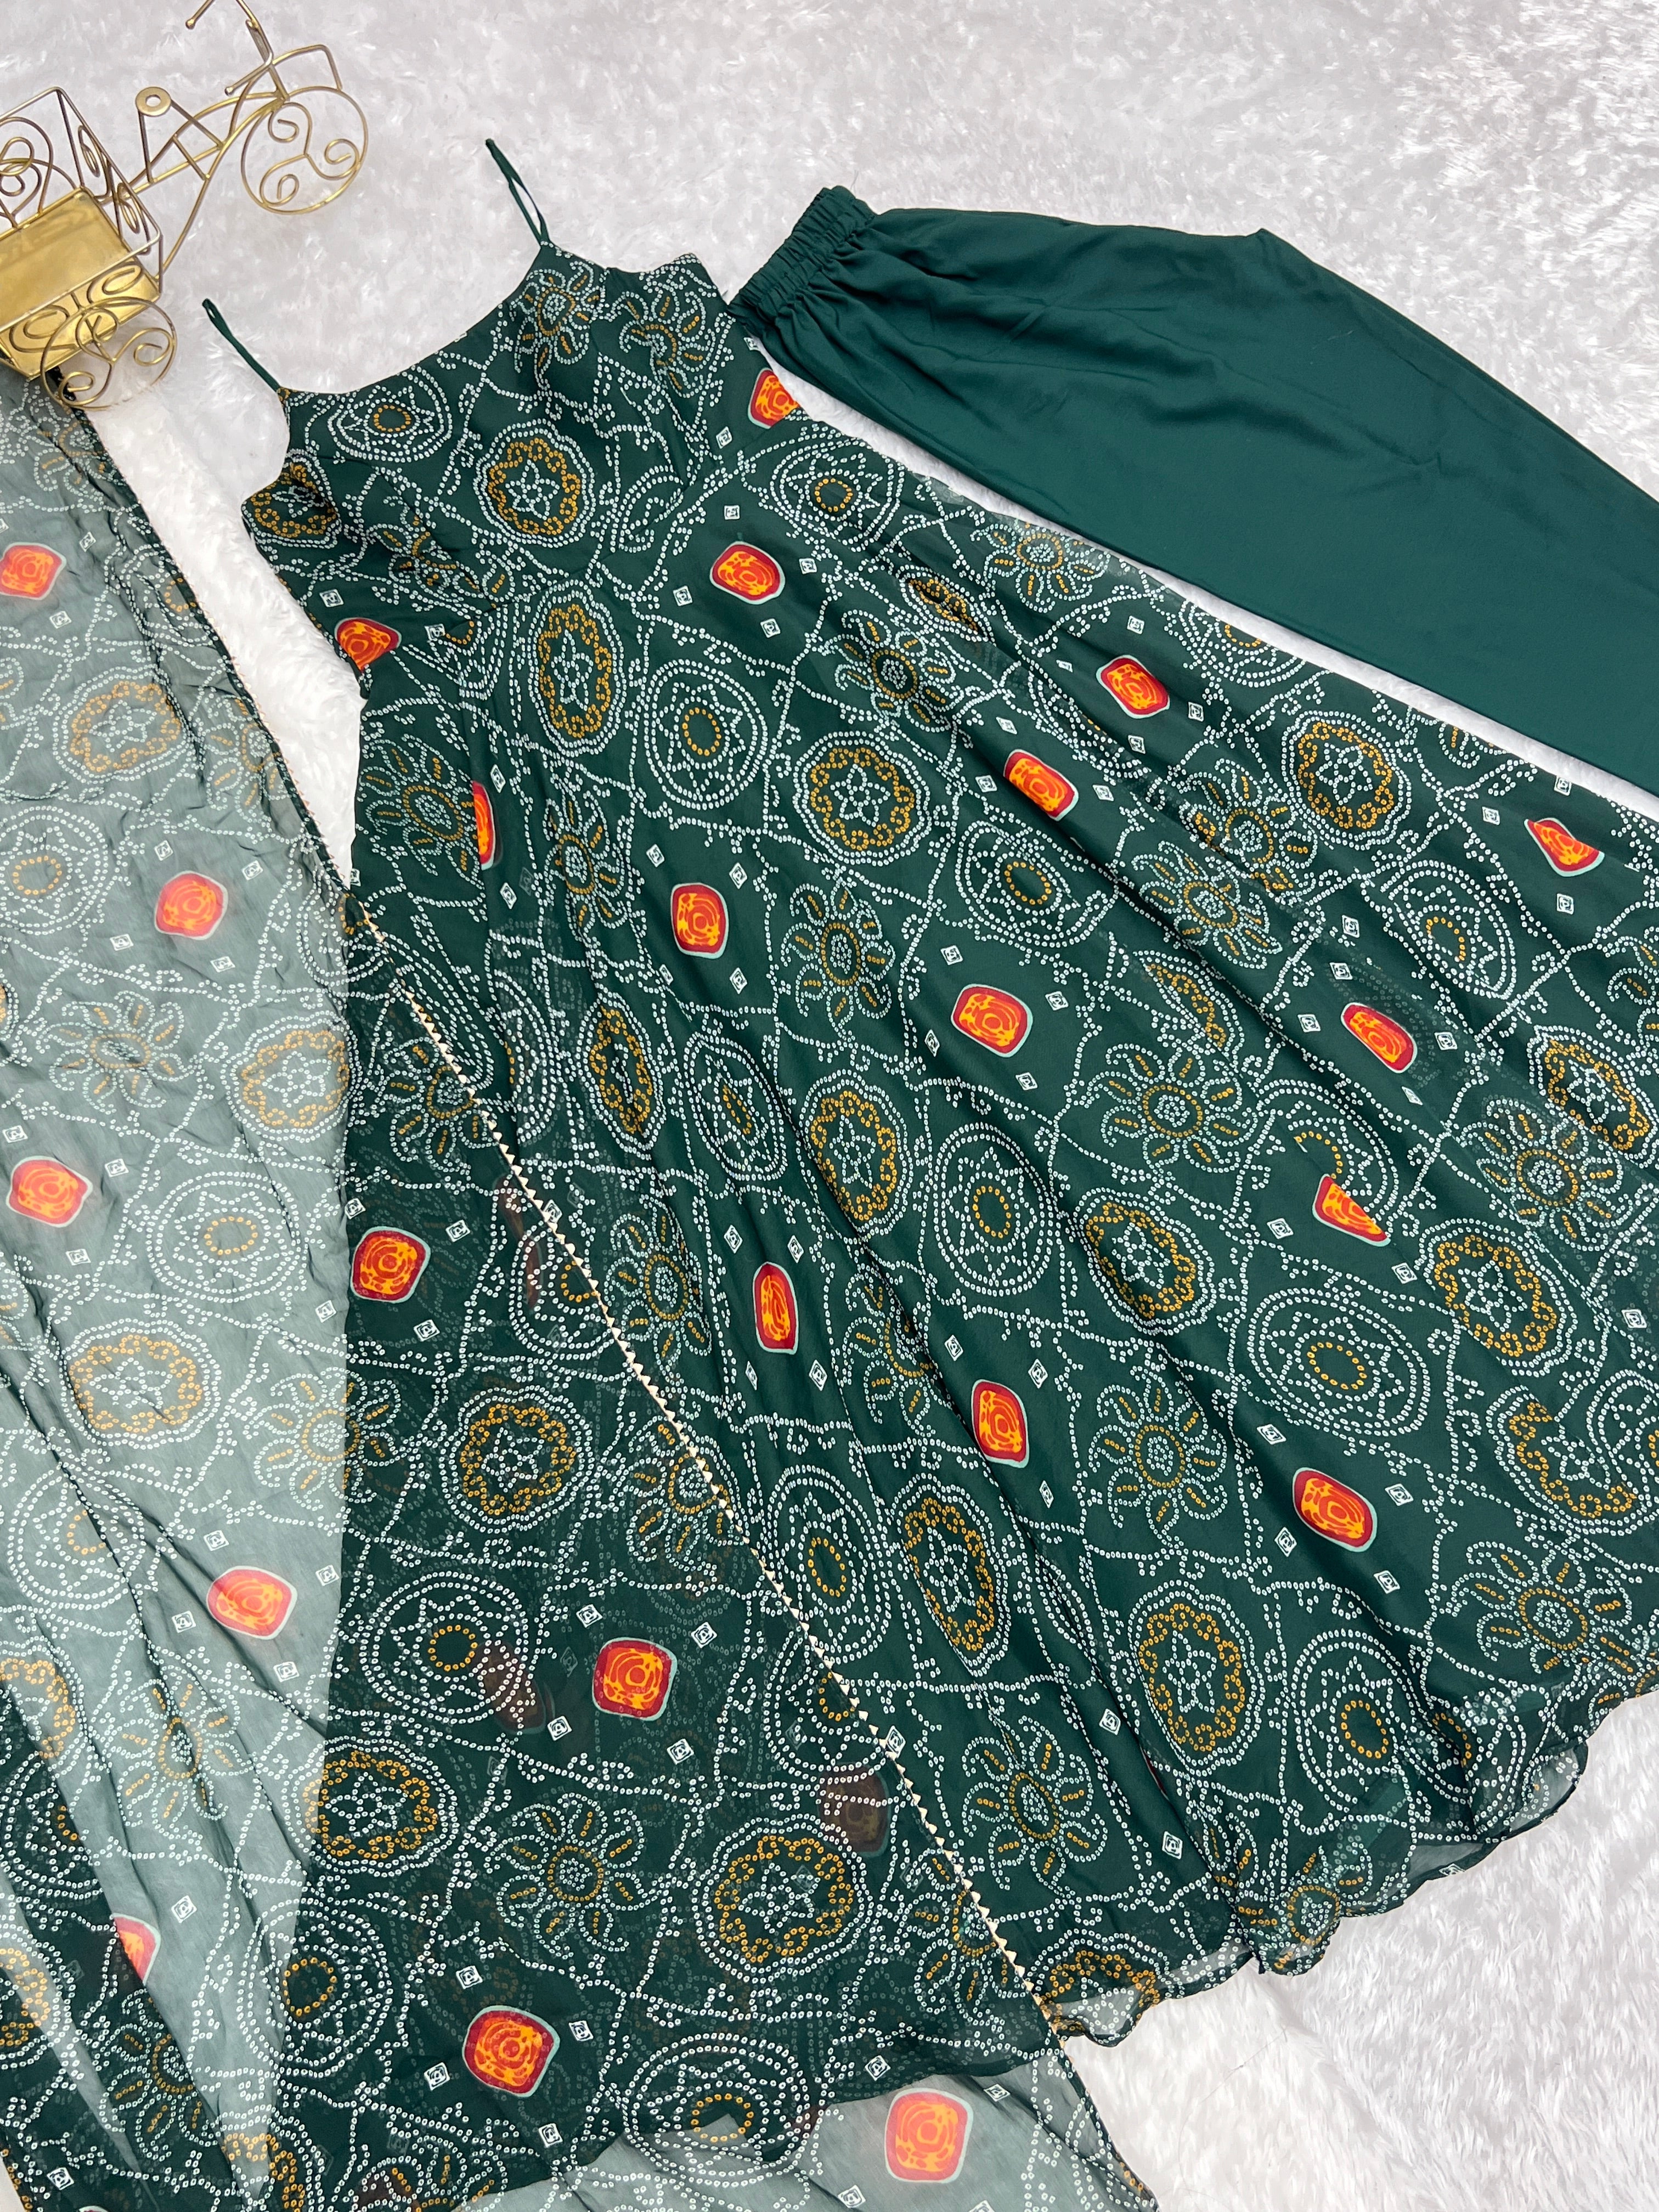 Pretty Green Color Bandhani Print Anarkali Suit